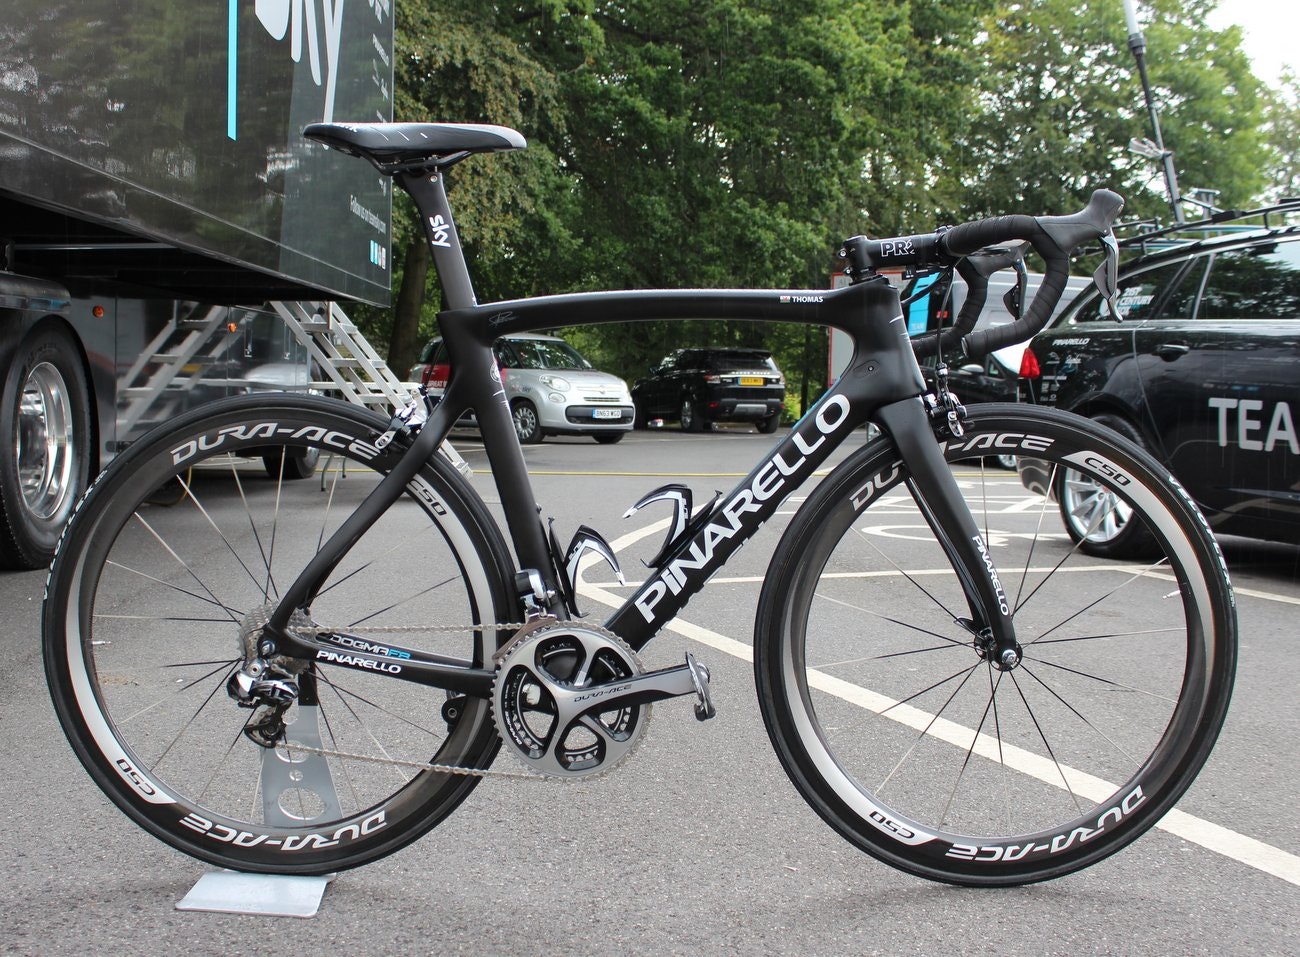 Tour de France 2014, Pinarello Dogma F8, Geraint Thomas (Pic: George Scott/Factory Media)